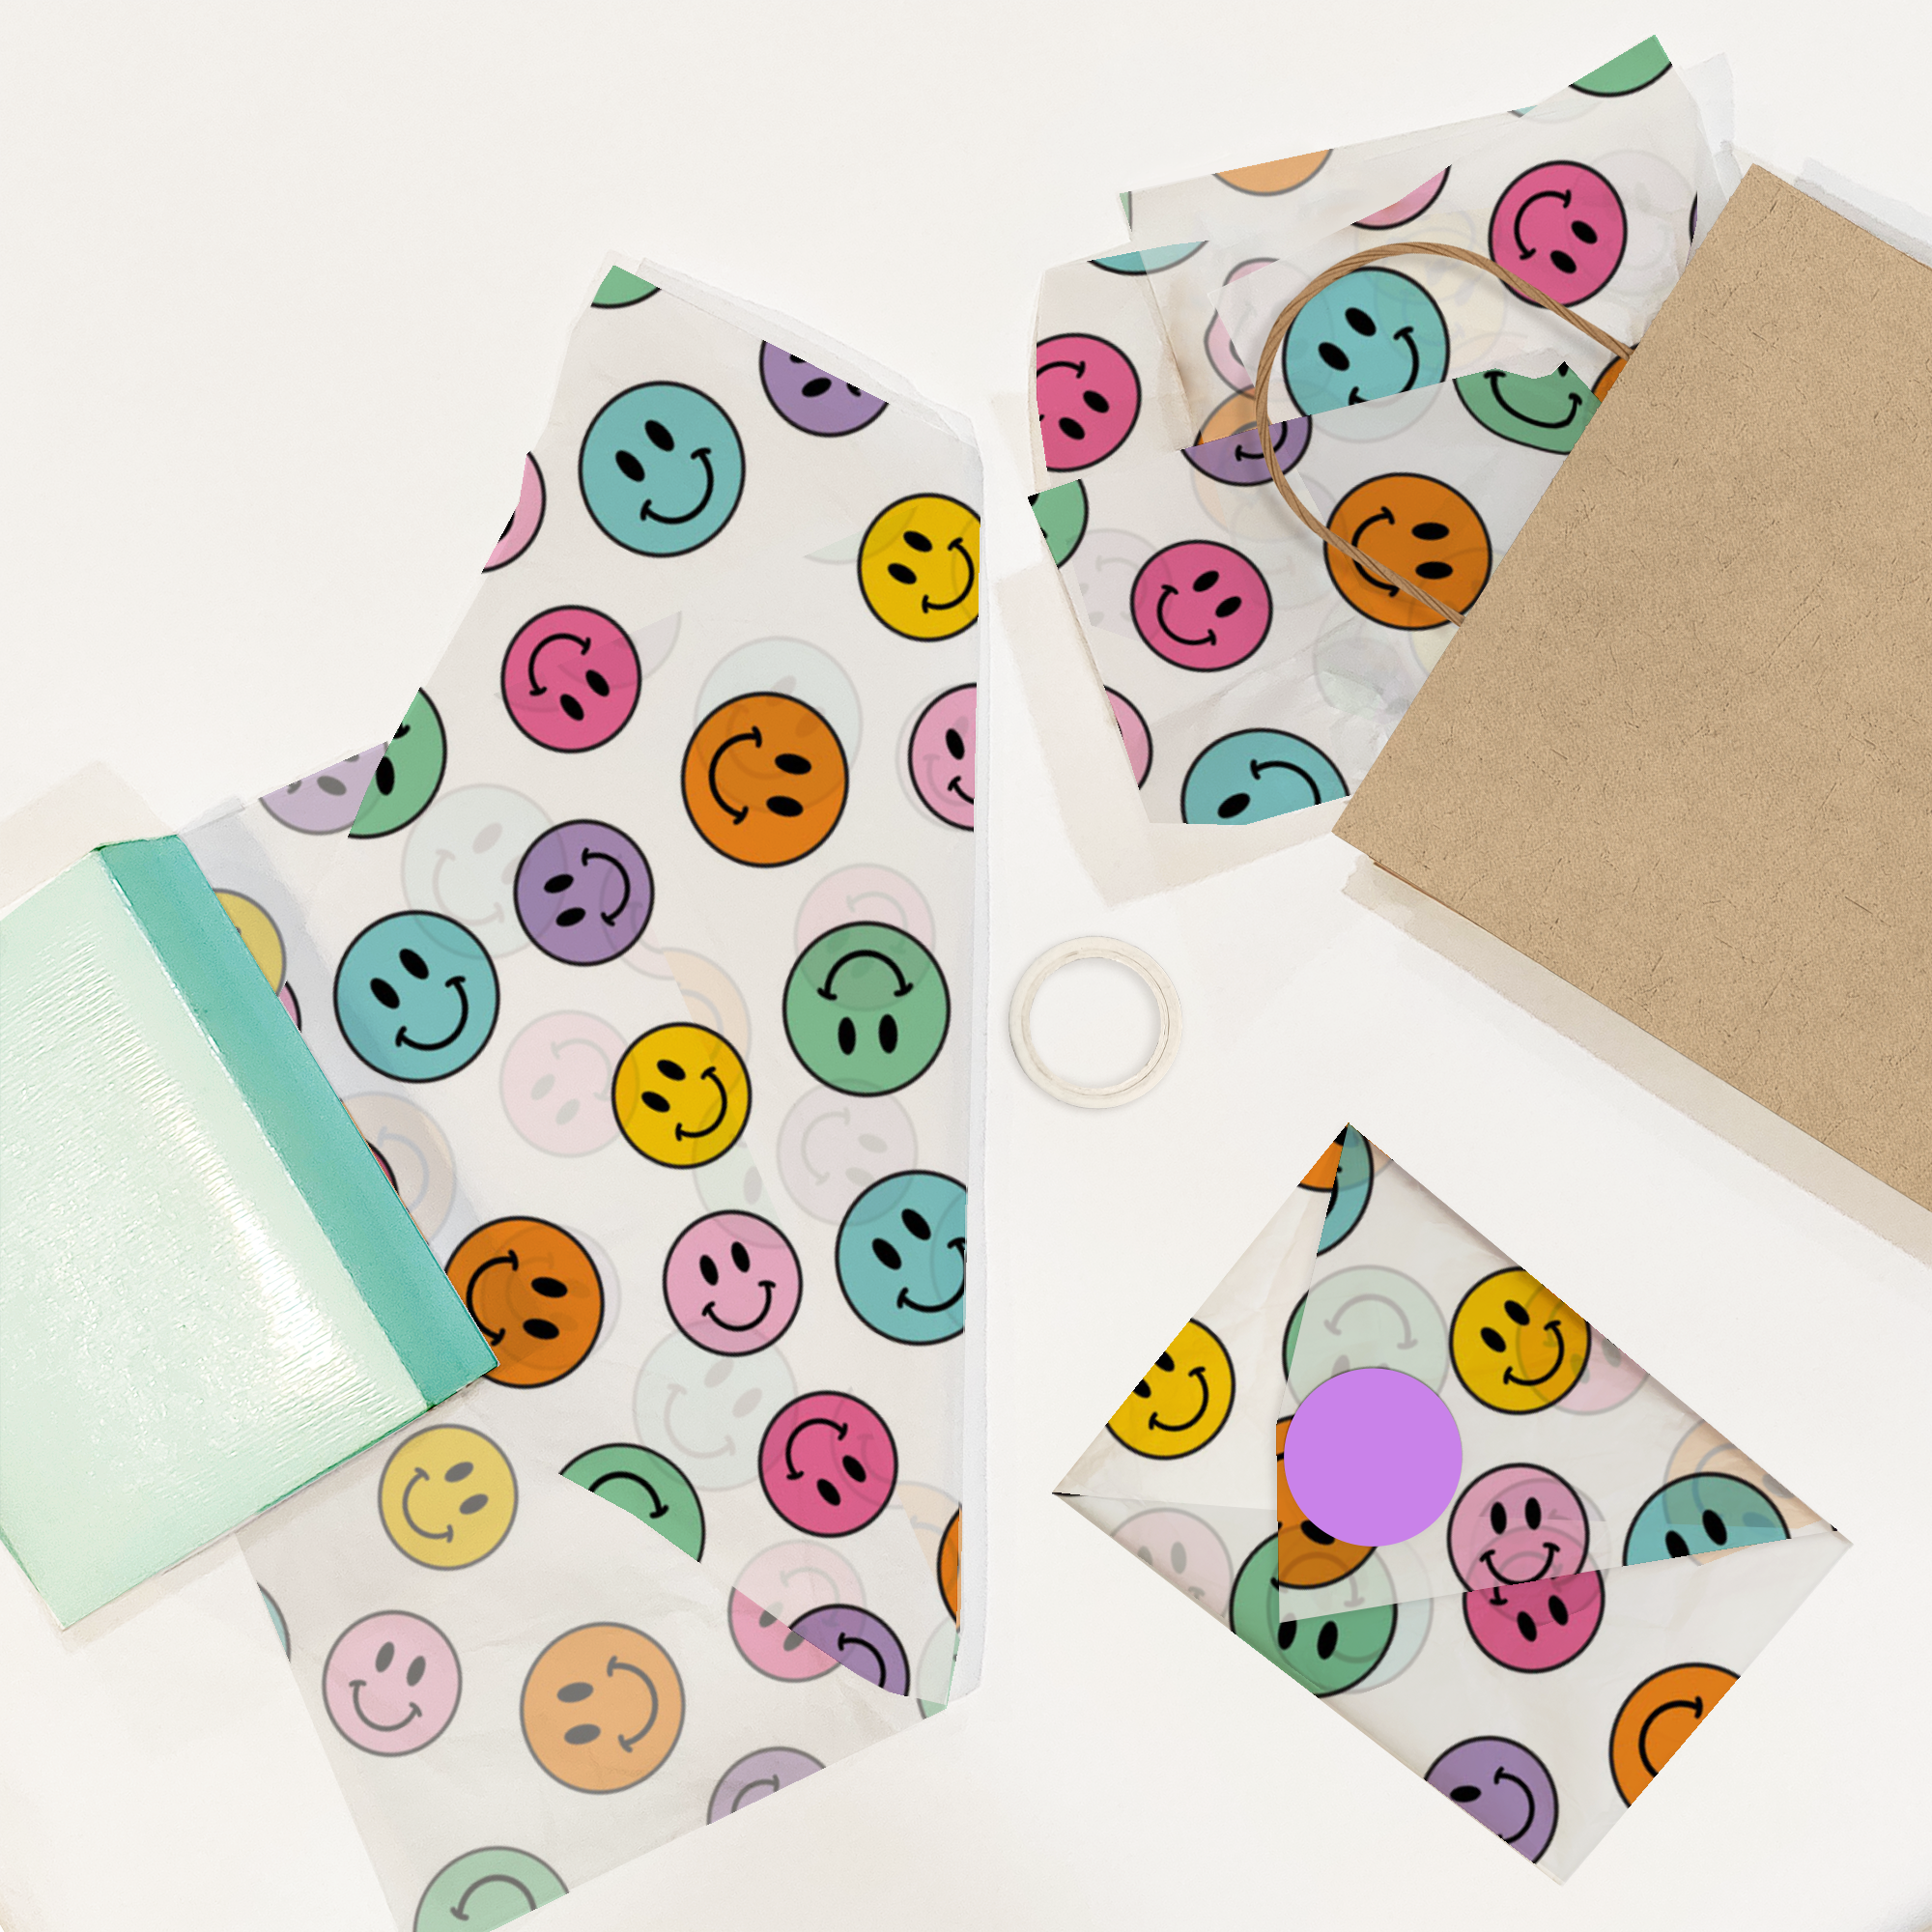 Smiley Faces Designer Tissue Paper for Gift Bags